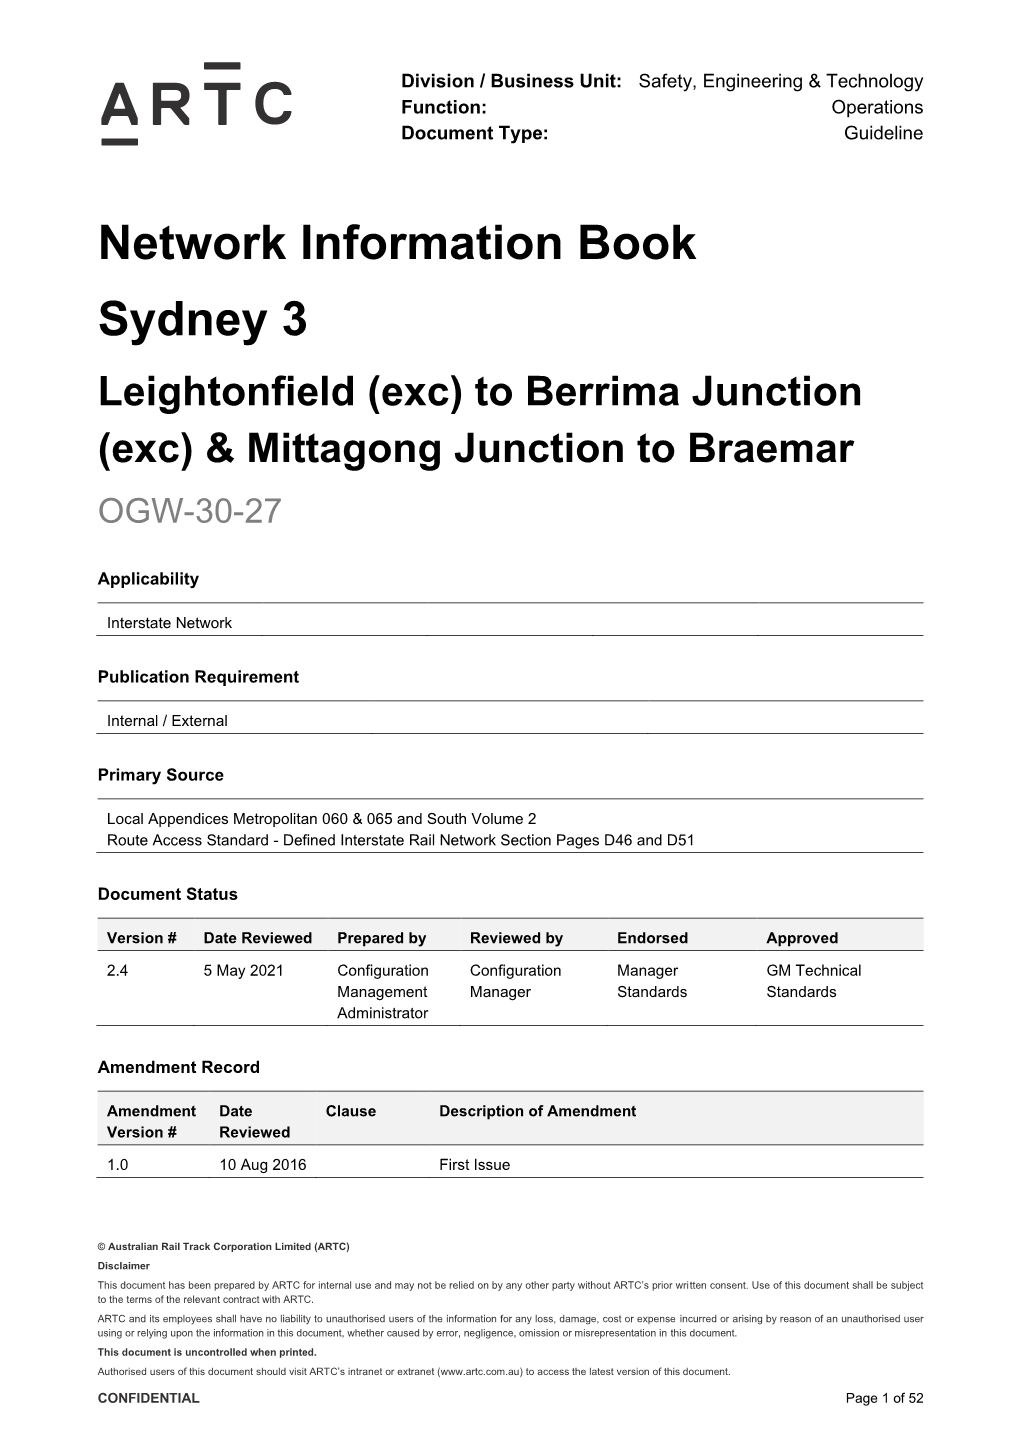 OGW-30-27 Leightonfield (Exc) to Berrima Junction